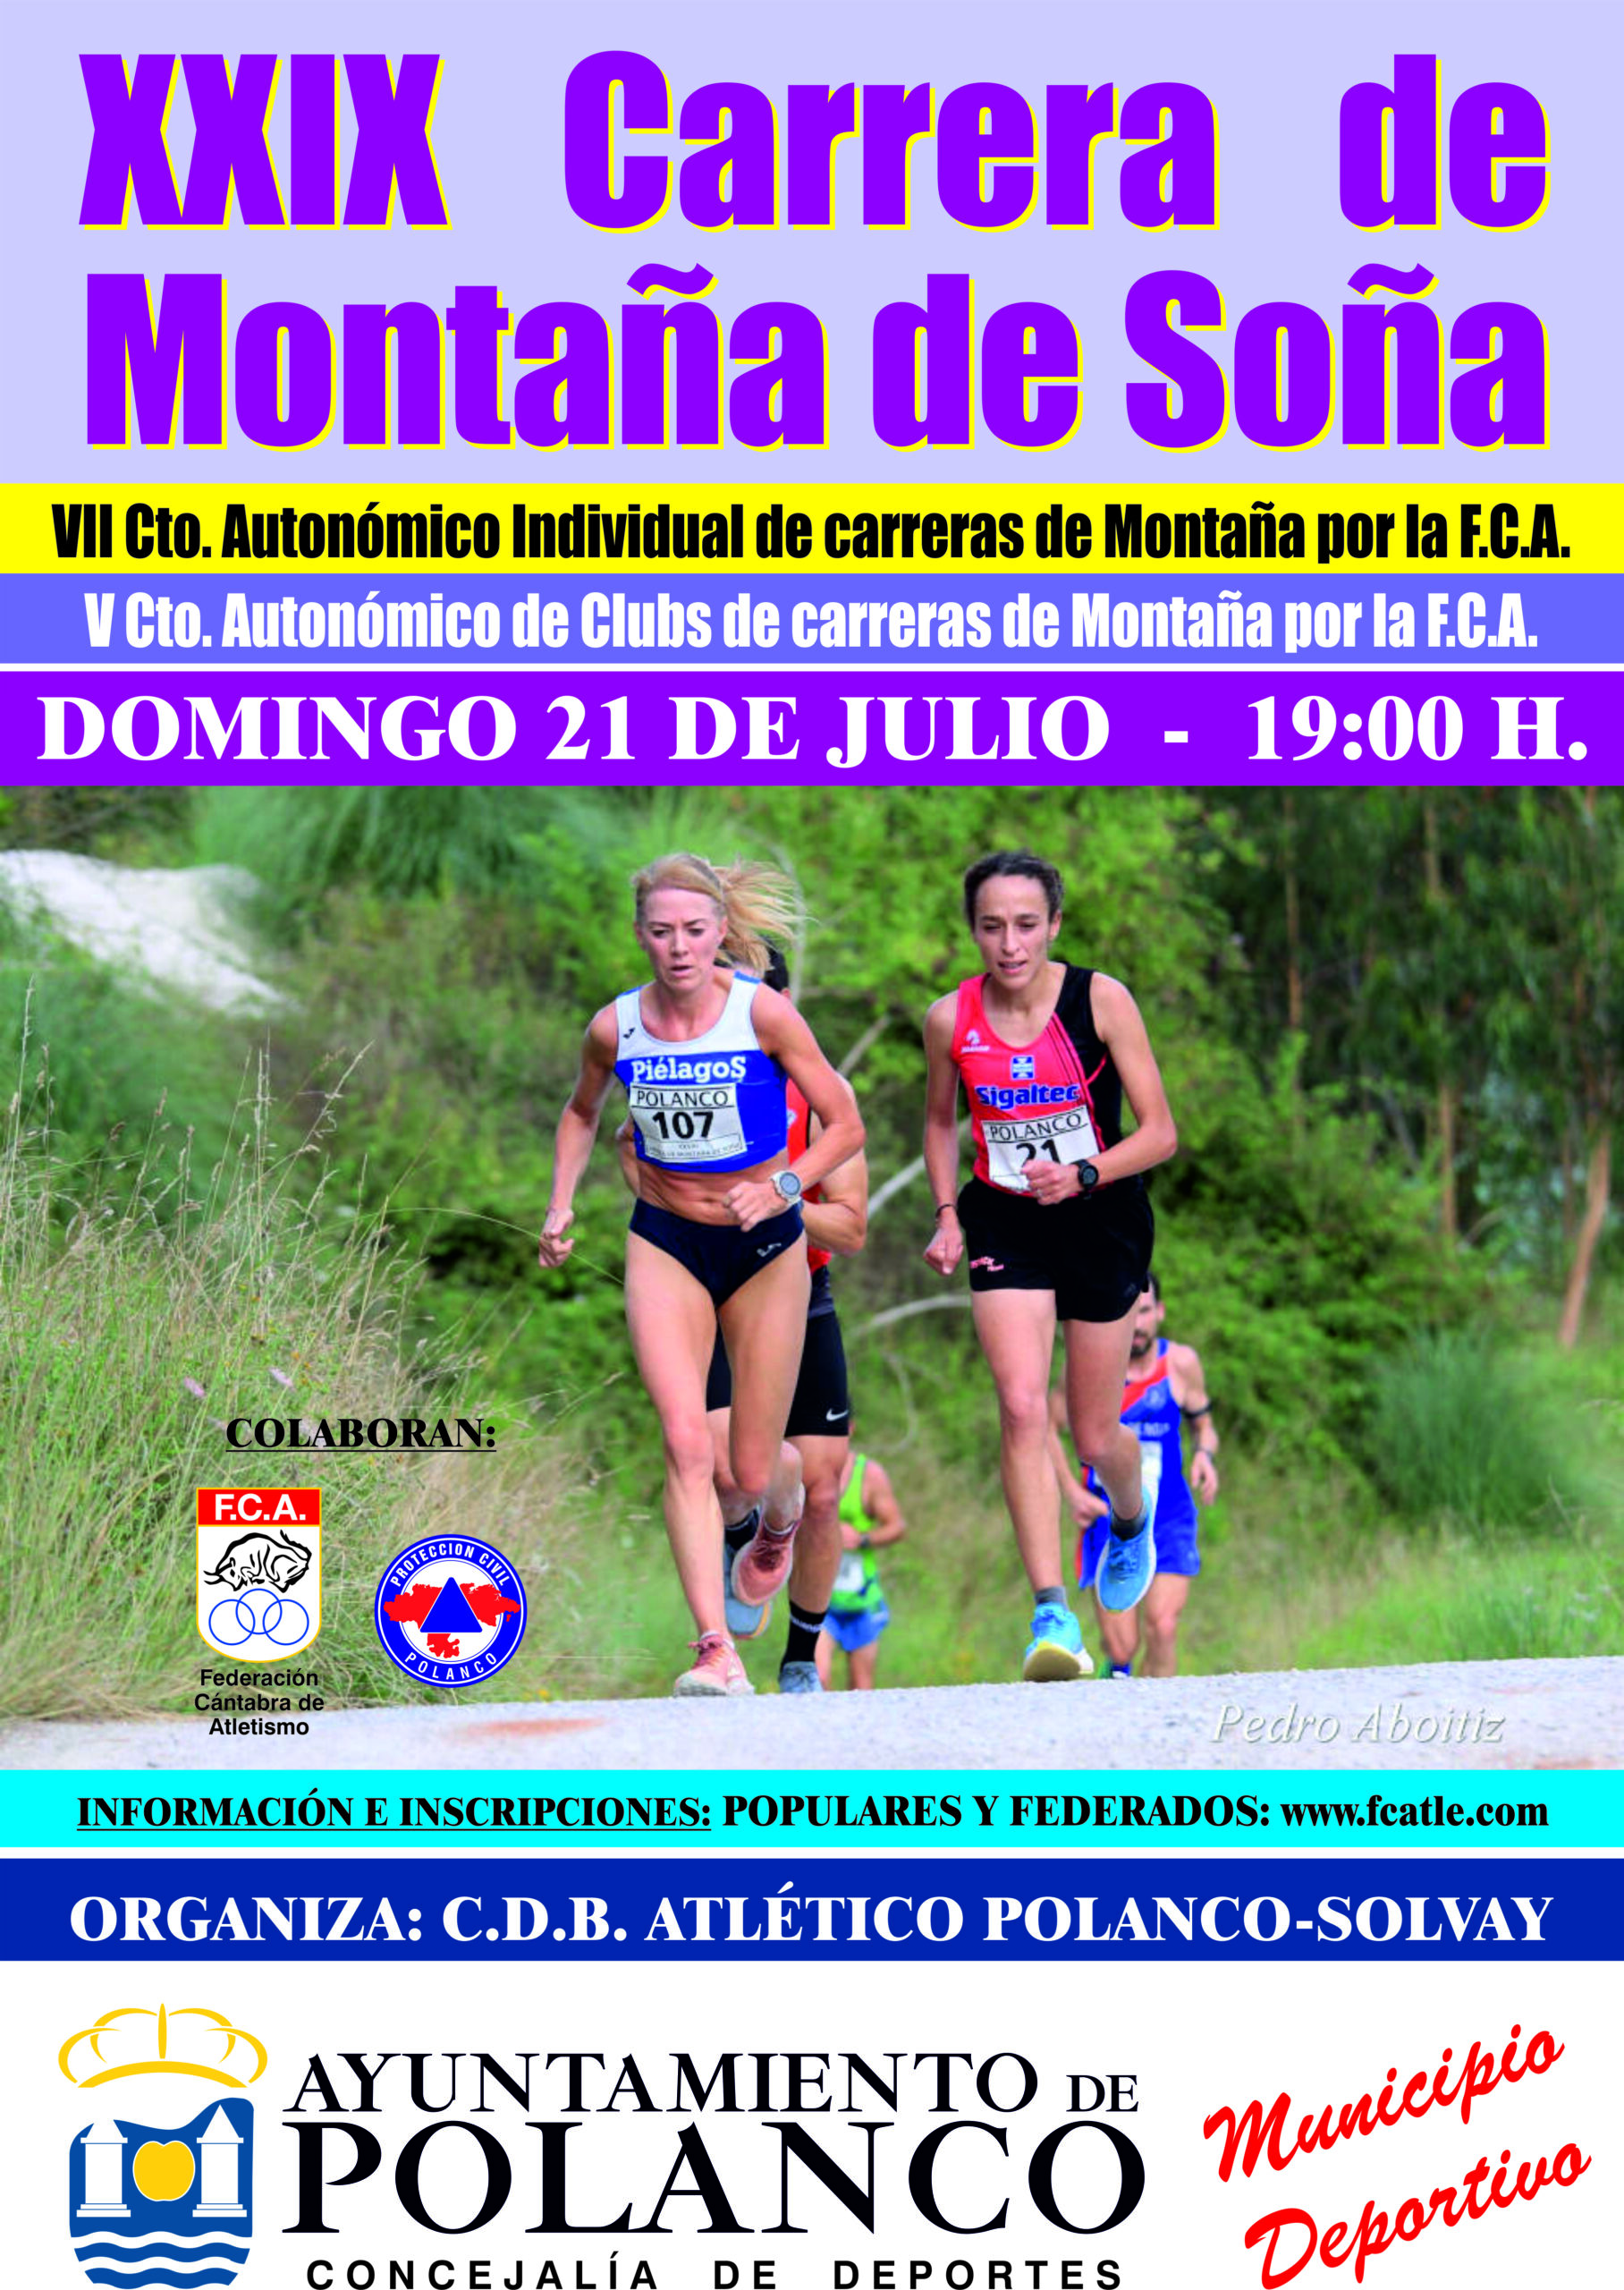 XXIX Carrera de Montaña de Soña / VII Campeonato de Cantabria Individual y V por Clubes de Carreras de Montaña @ Soña, Cantabria